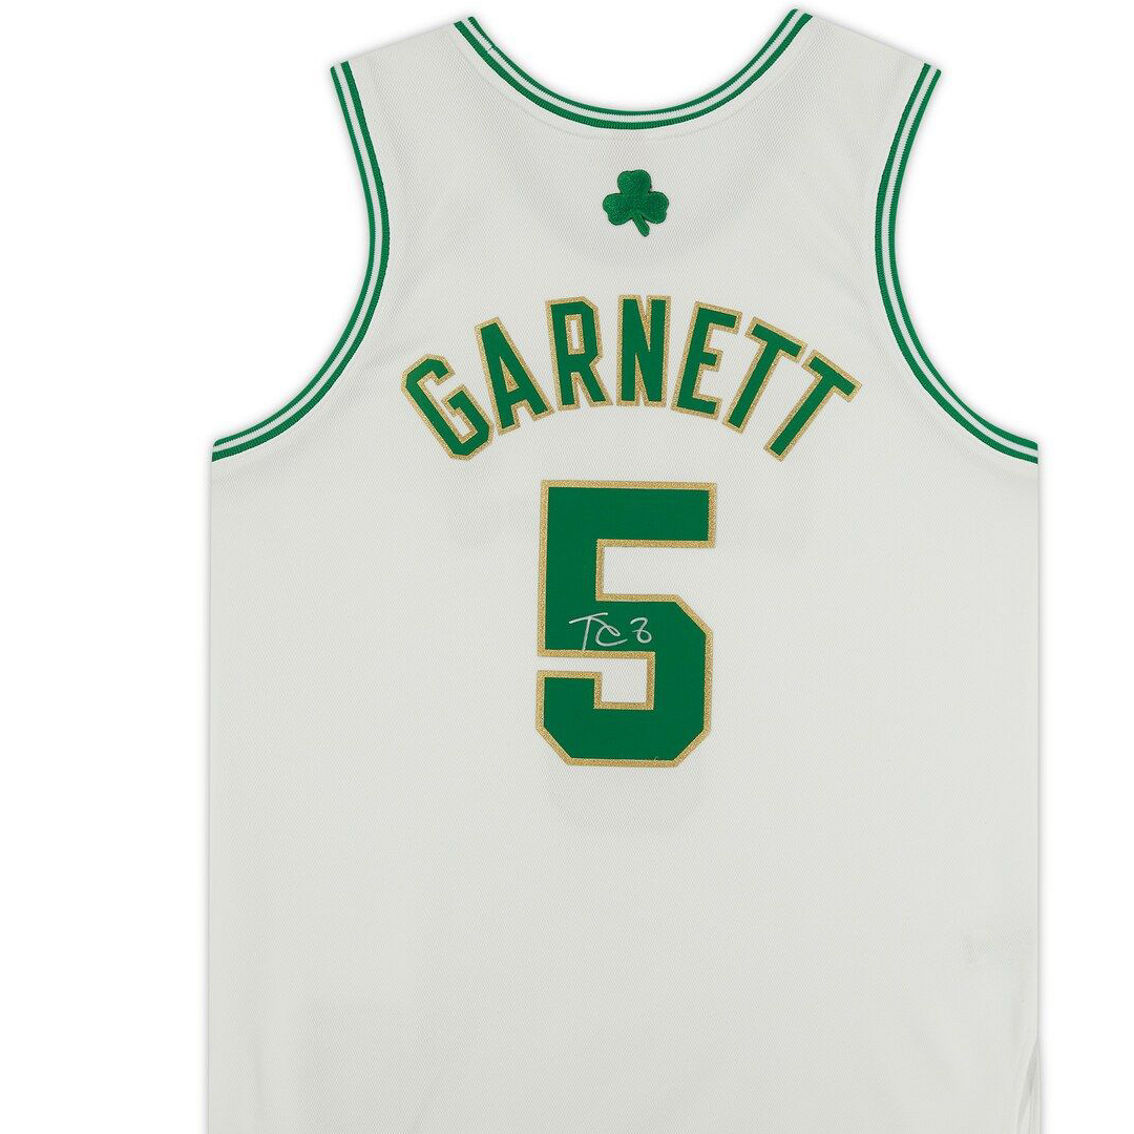 Fanatics Authentic Kevin Garnett White Boston Celtics Autographed 2008-09 Authentic Jersey - Image 3 of 4